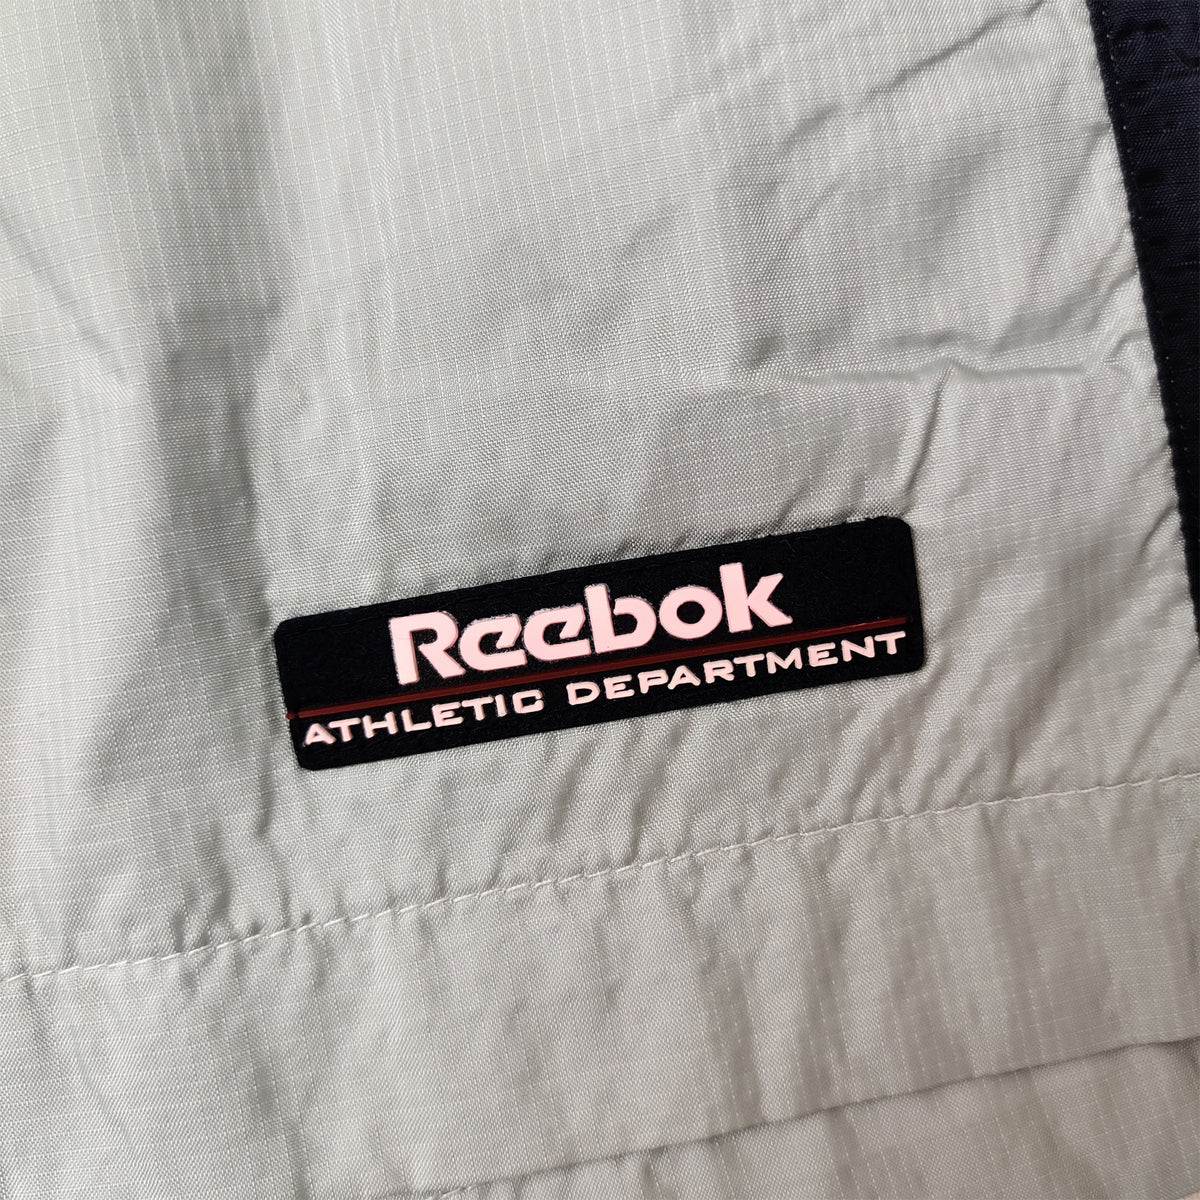 Reebok Womens Retro Original Mid 90s Running Shorts - Blue - UK Size 12